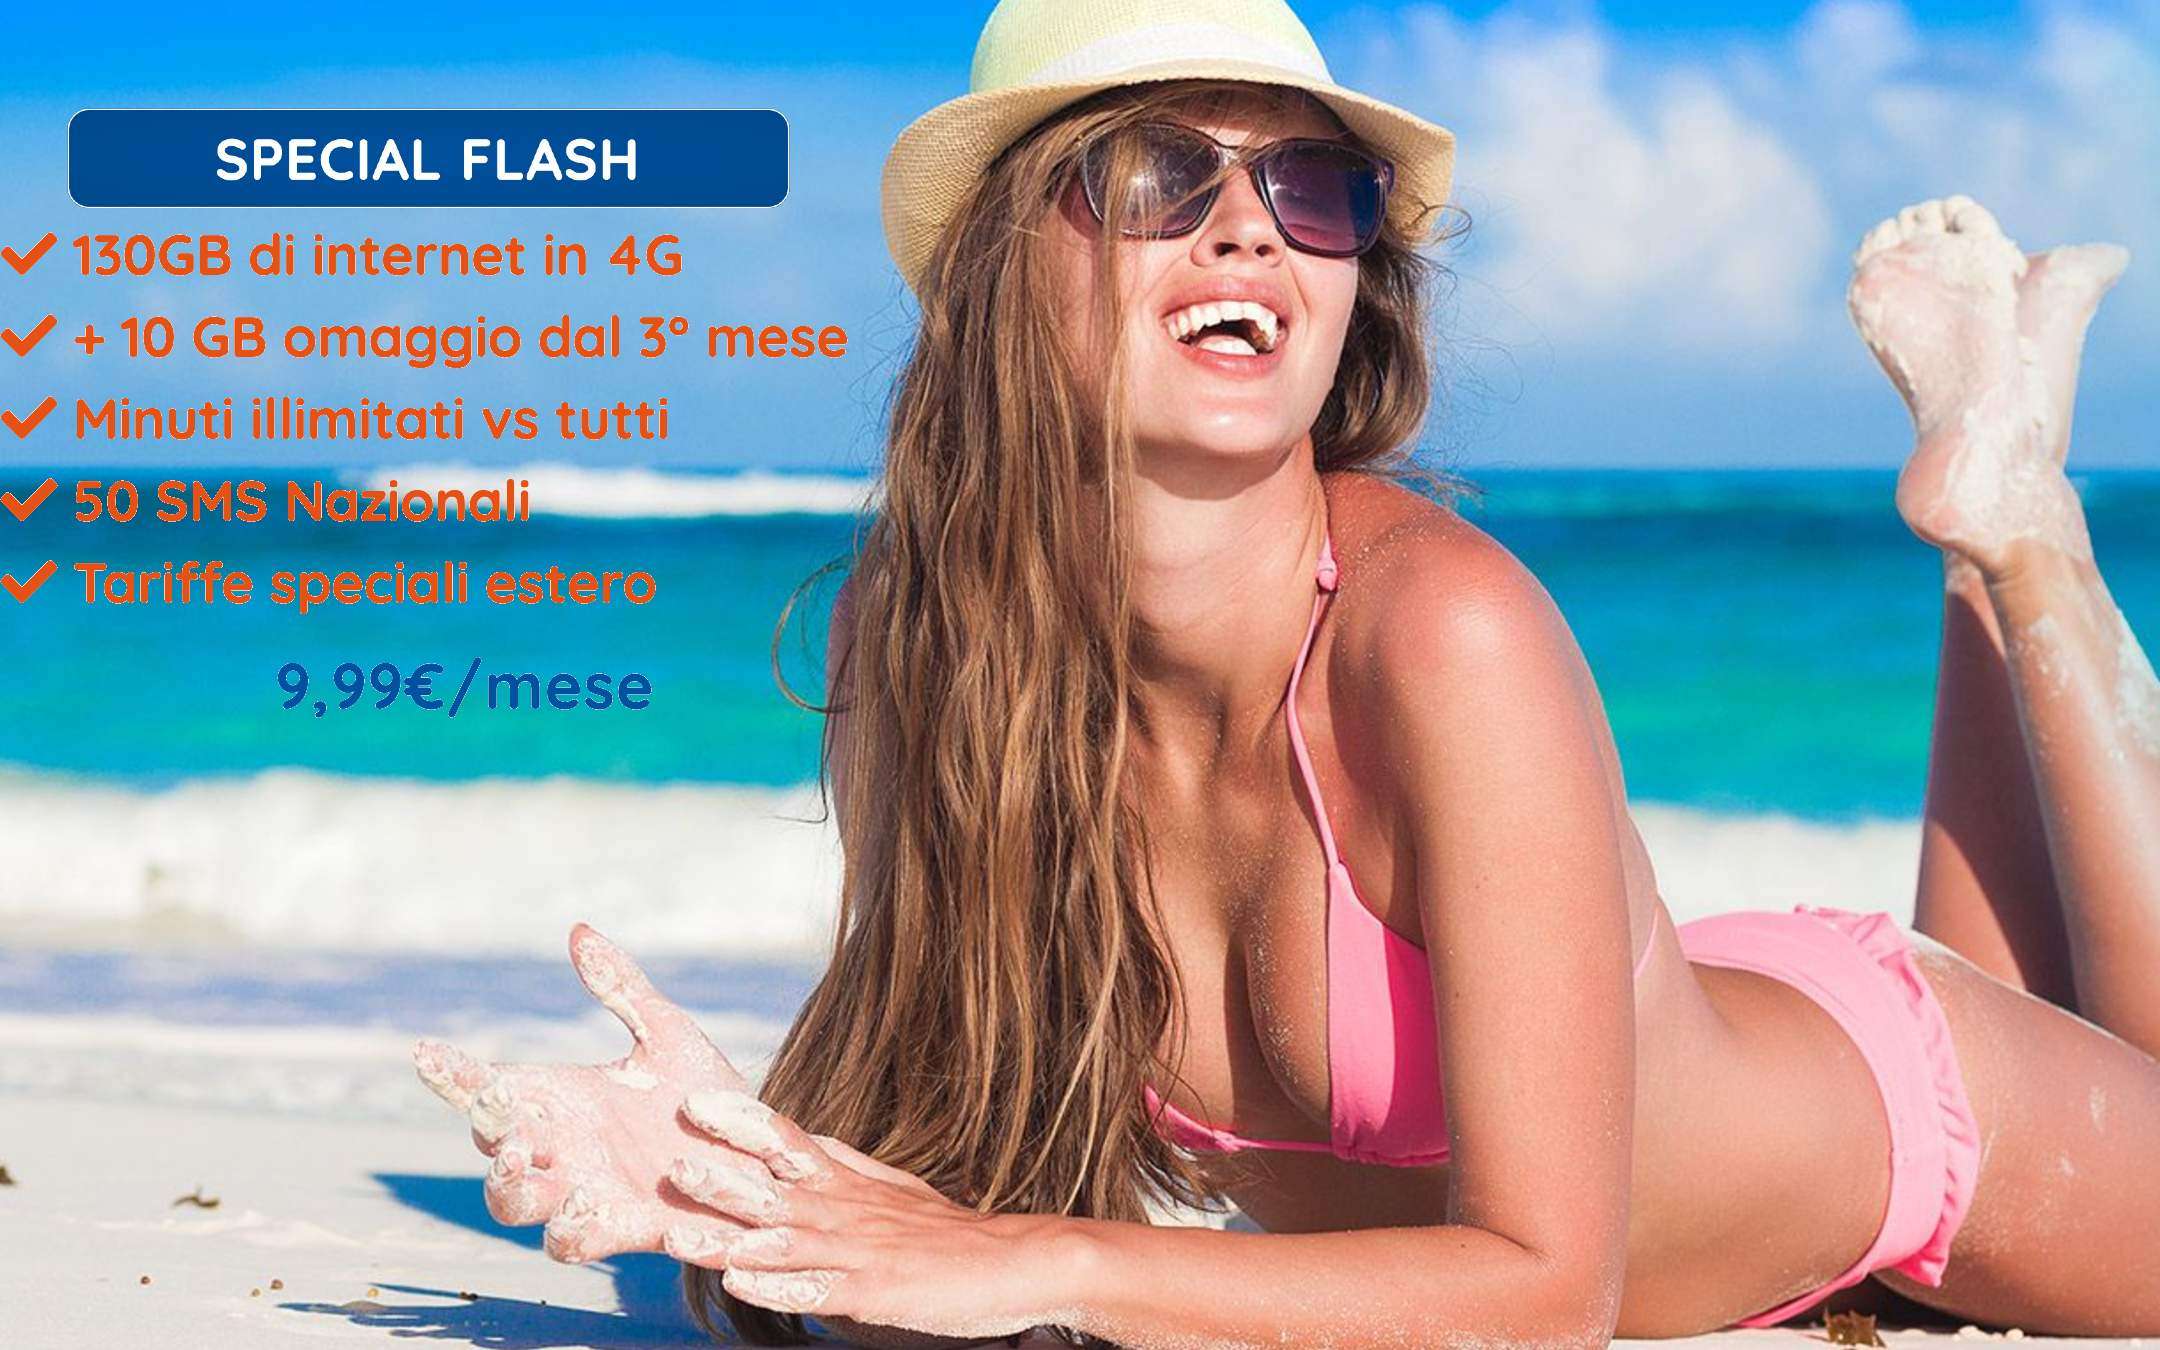 1Mobile Special Flash: Promo BOMBA, 140GB a 9,99€